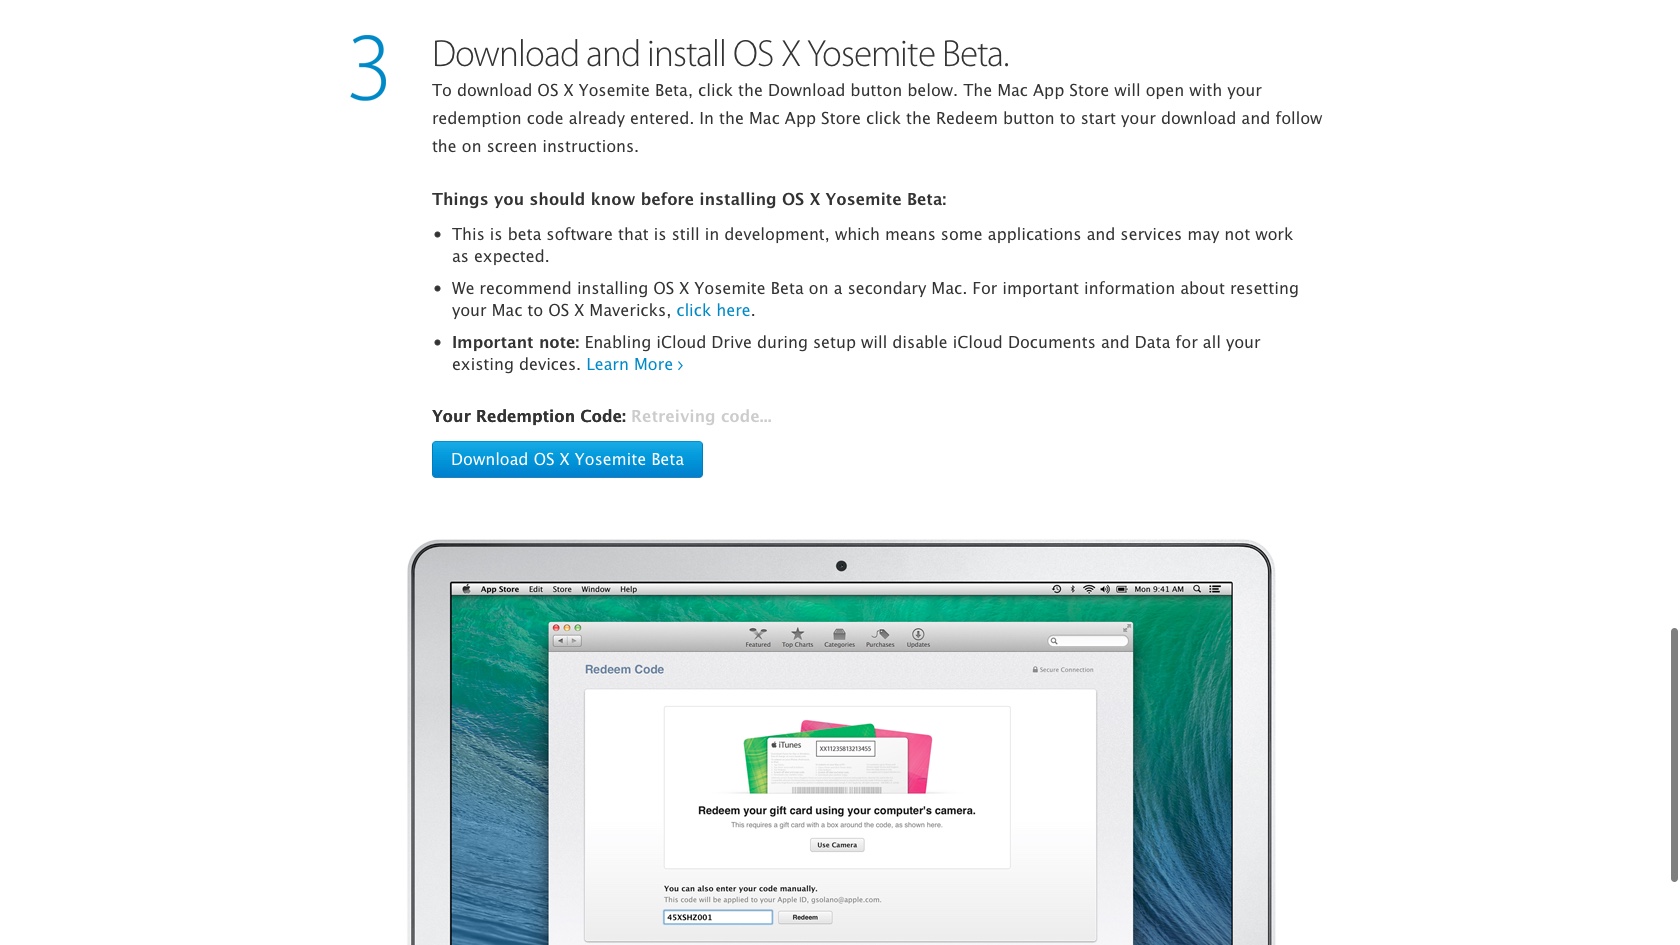 OS X Yosemite Public Beta Redemption